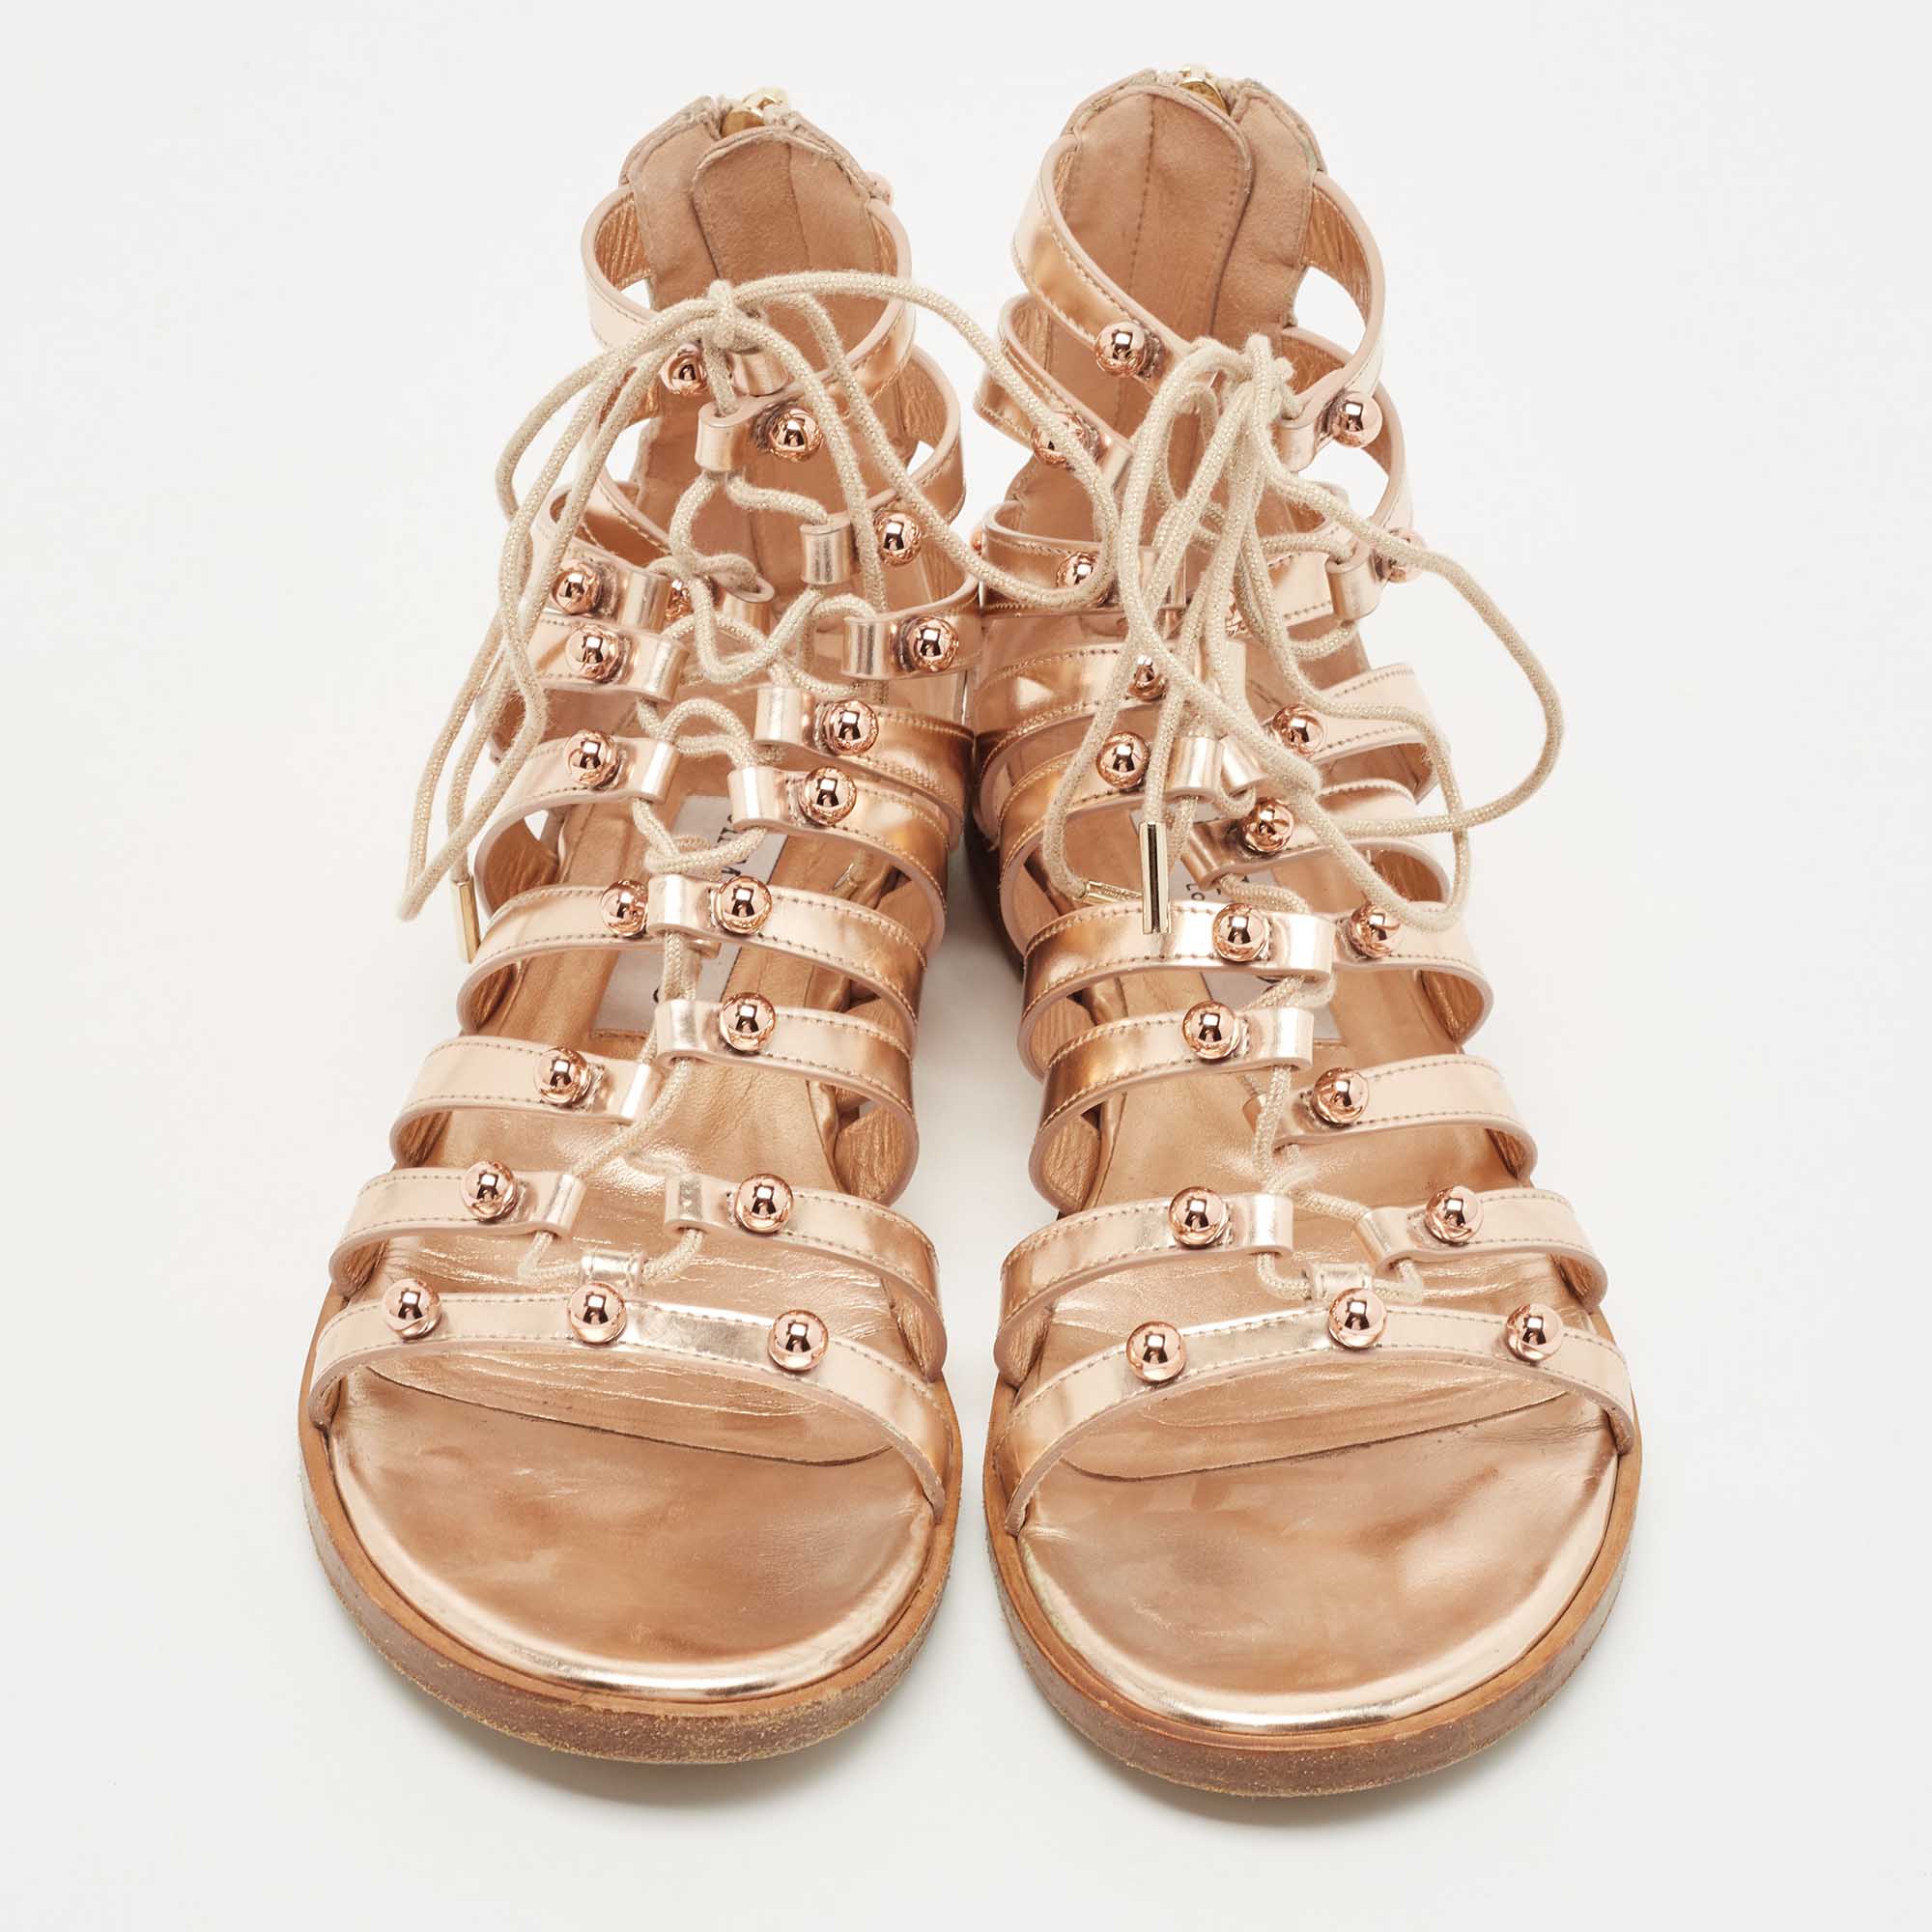 Jimmy Choo Rose Gold Leather Gigi Sandals Size 36.5